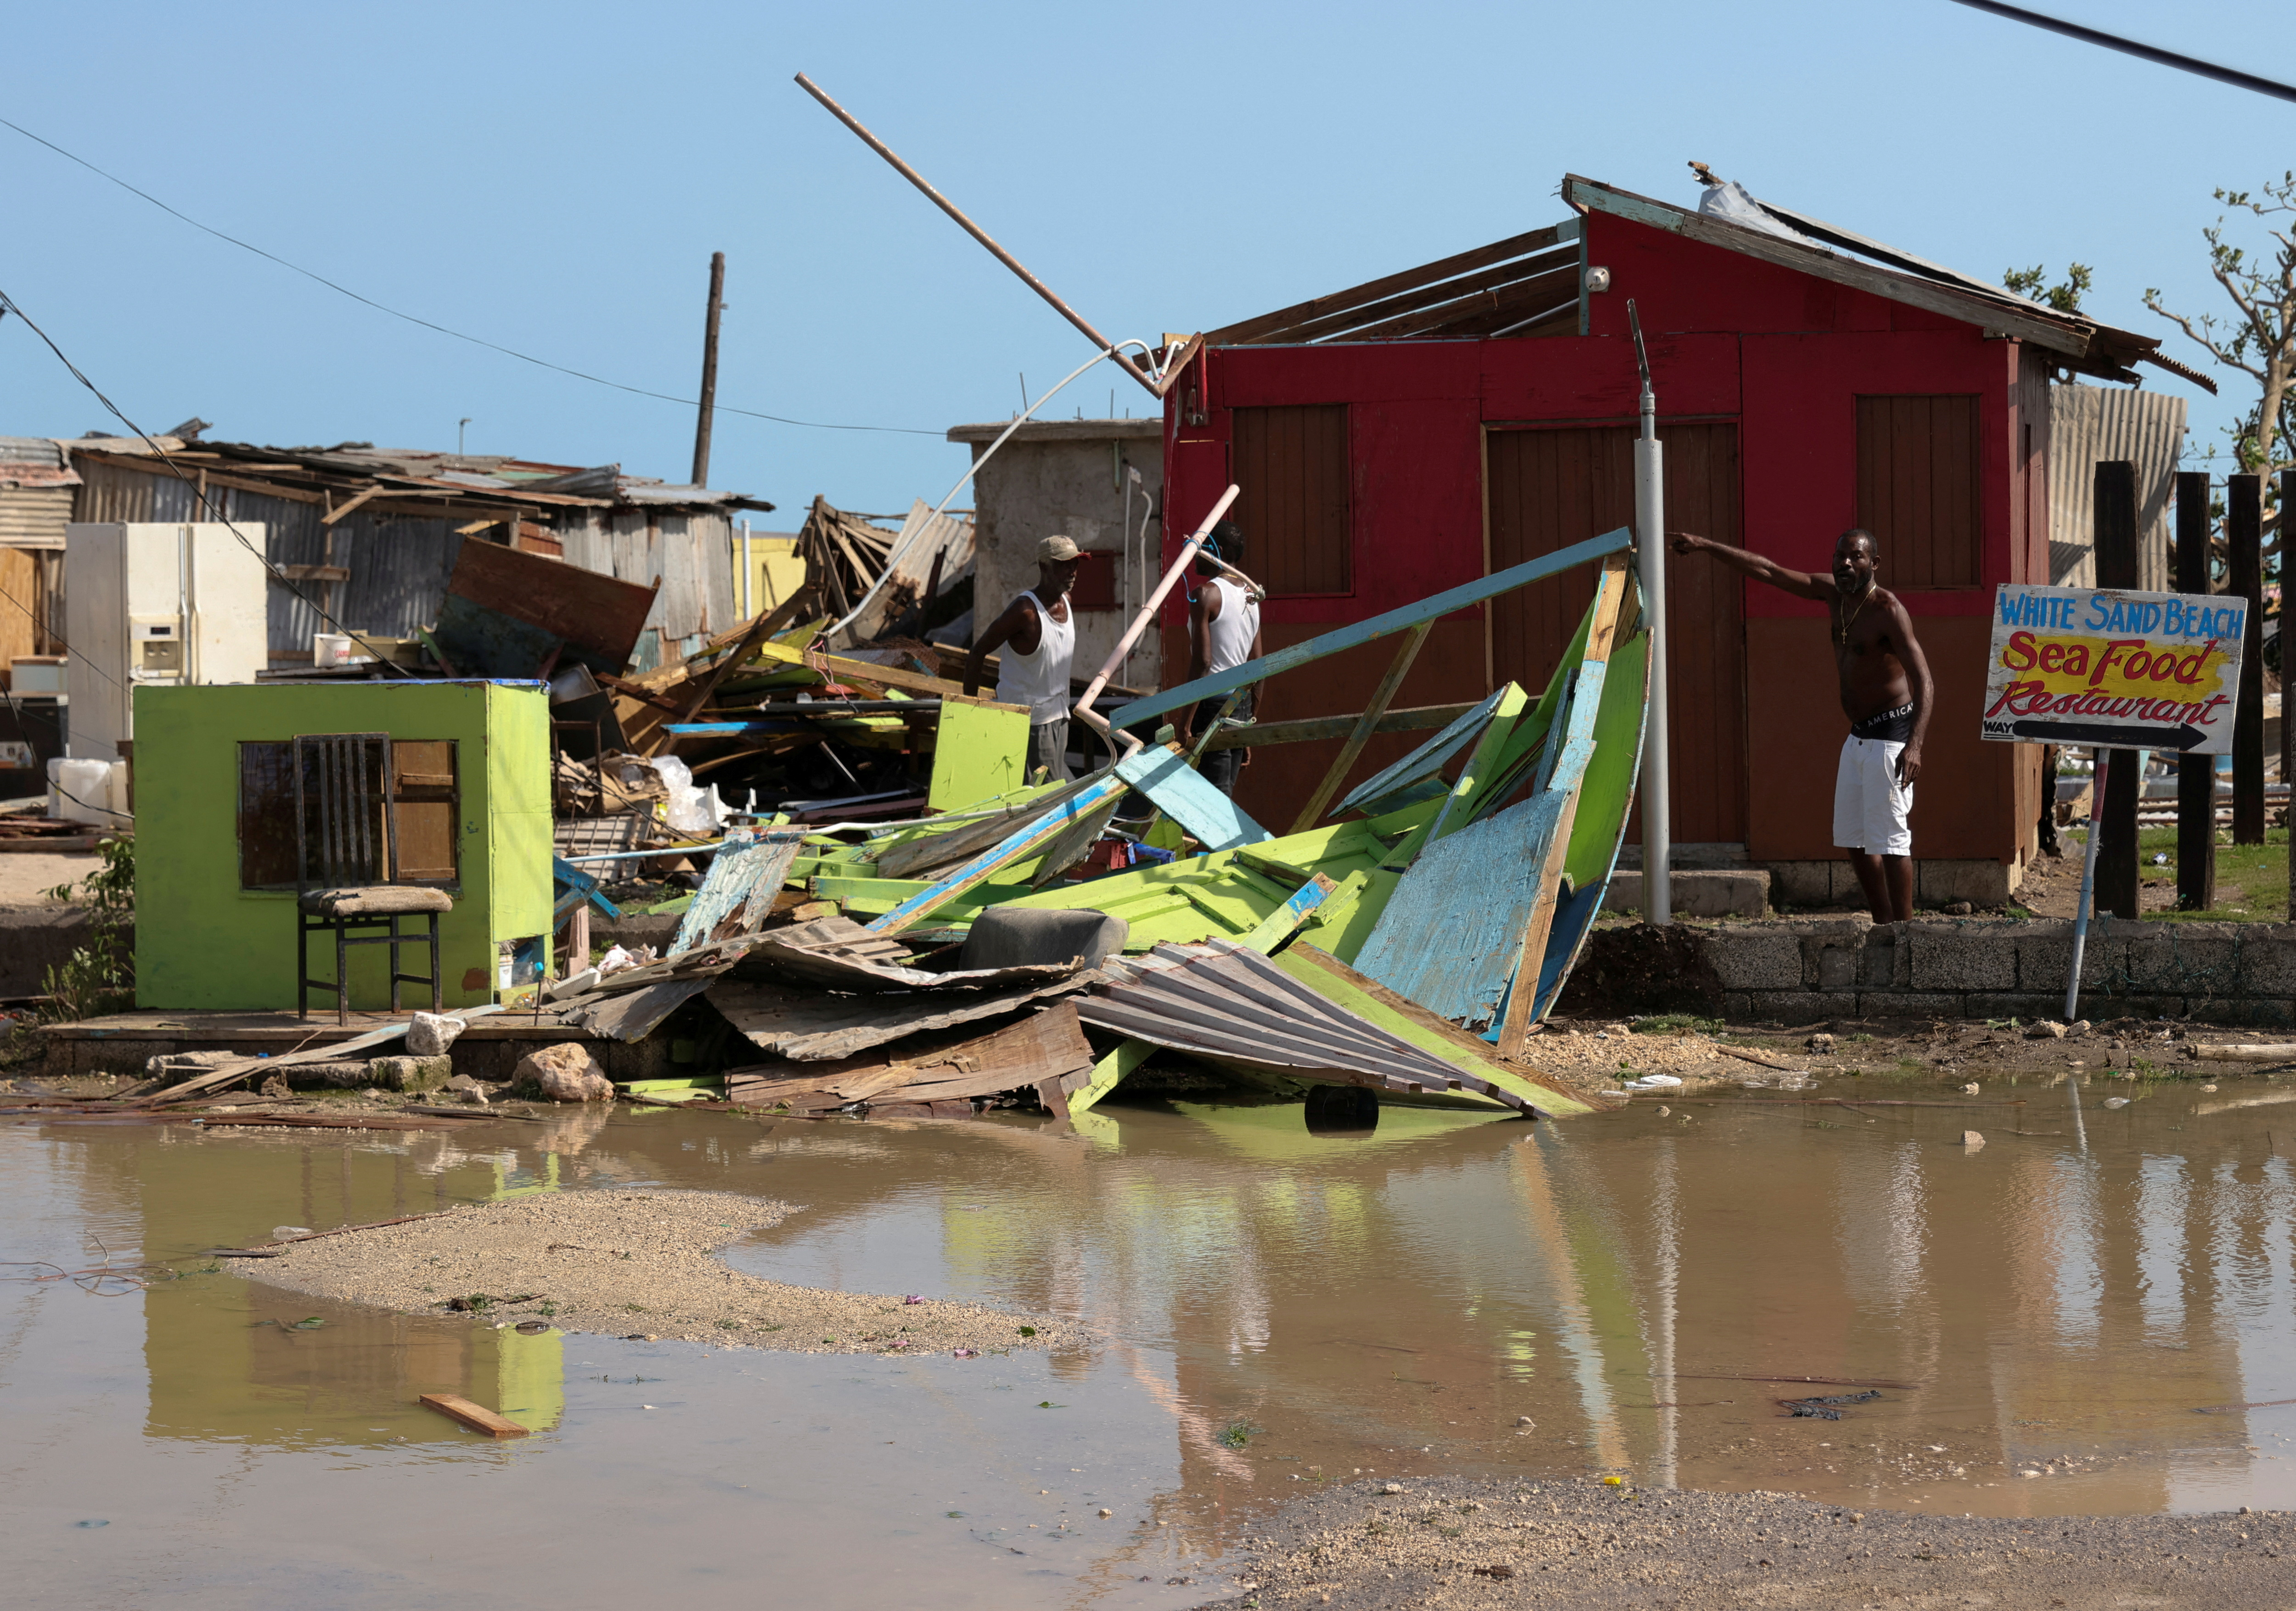 Aftermath of Hurricane Beryl in Jamaica